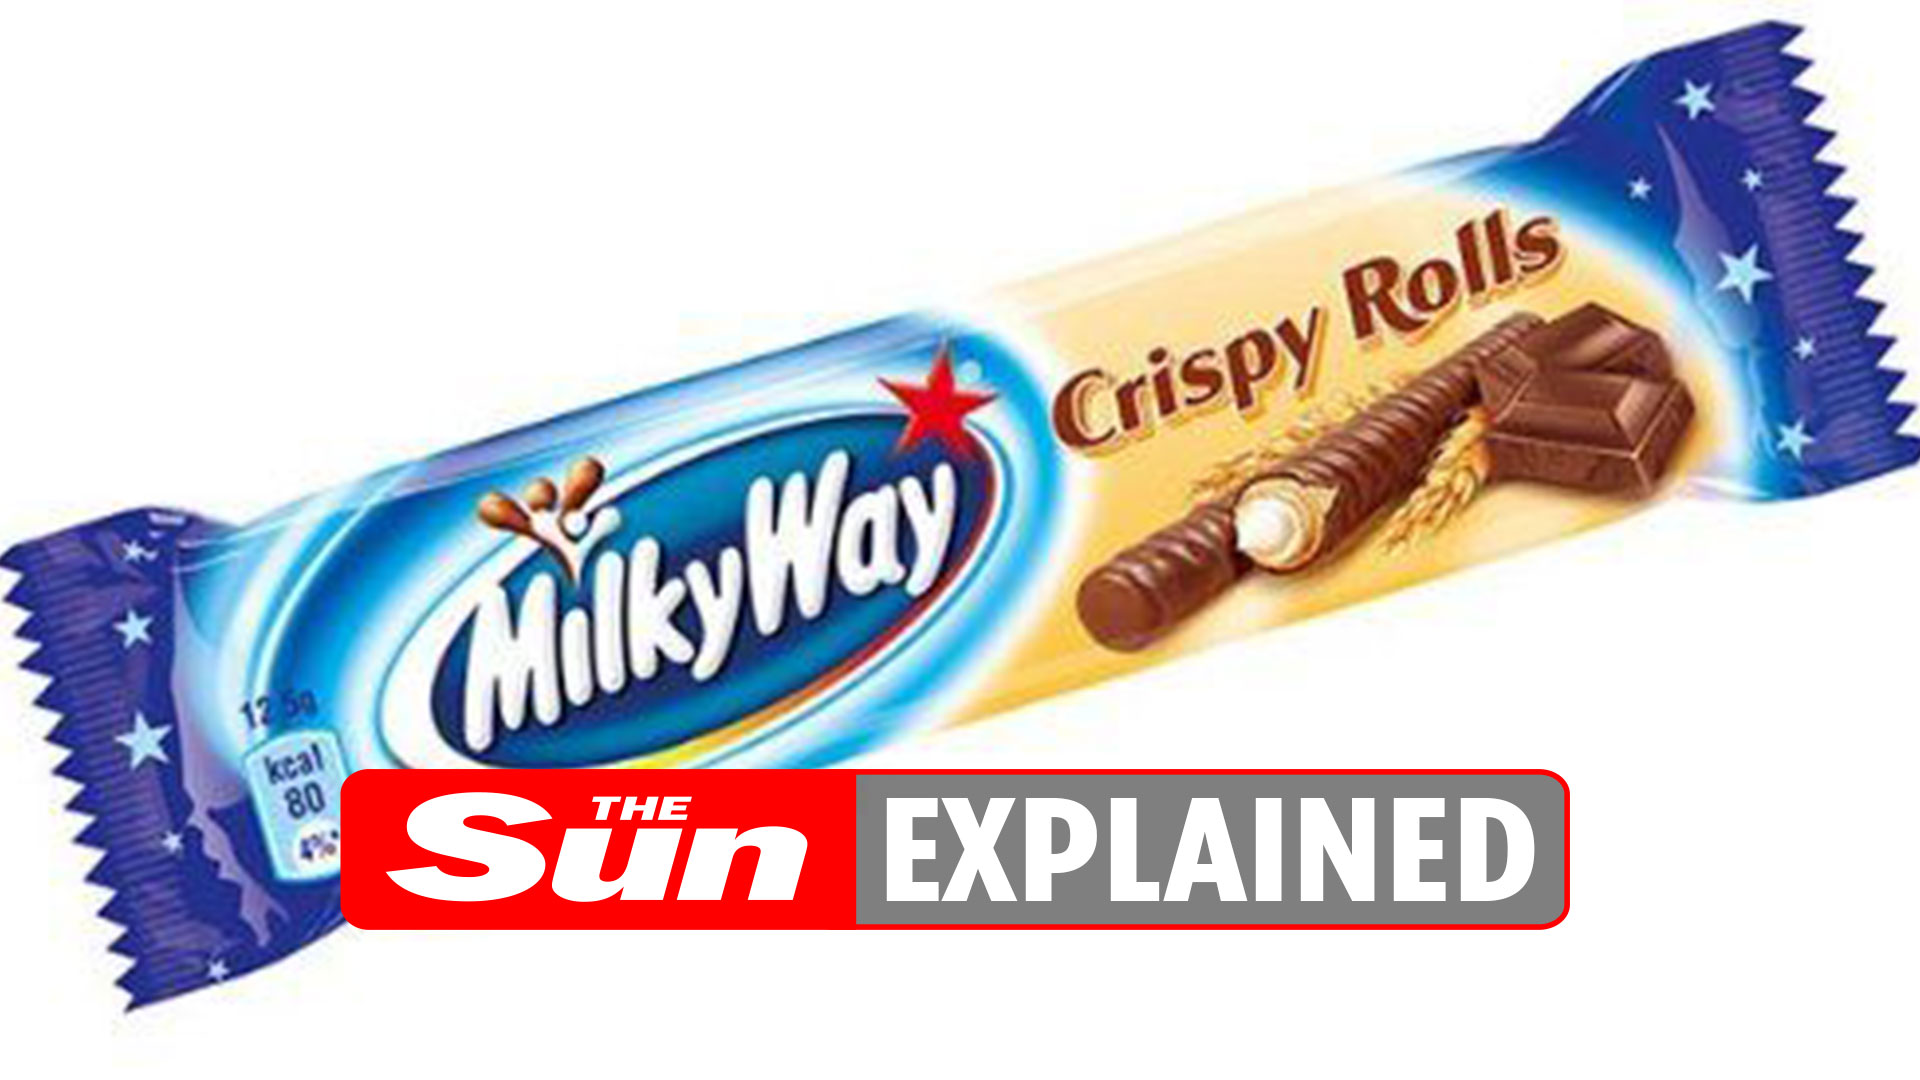 Have Milky Way Crispy Rolls been discontinued?